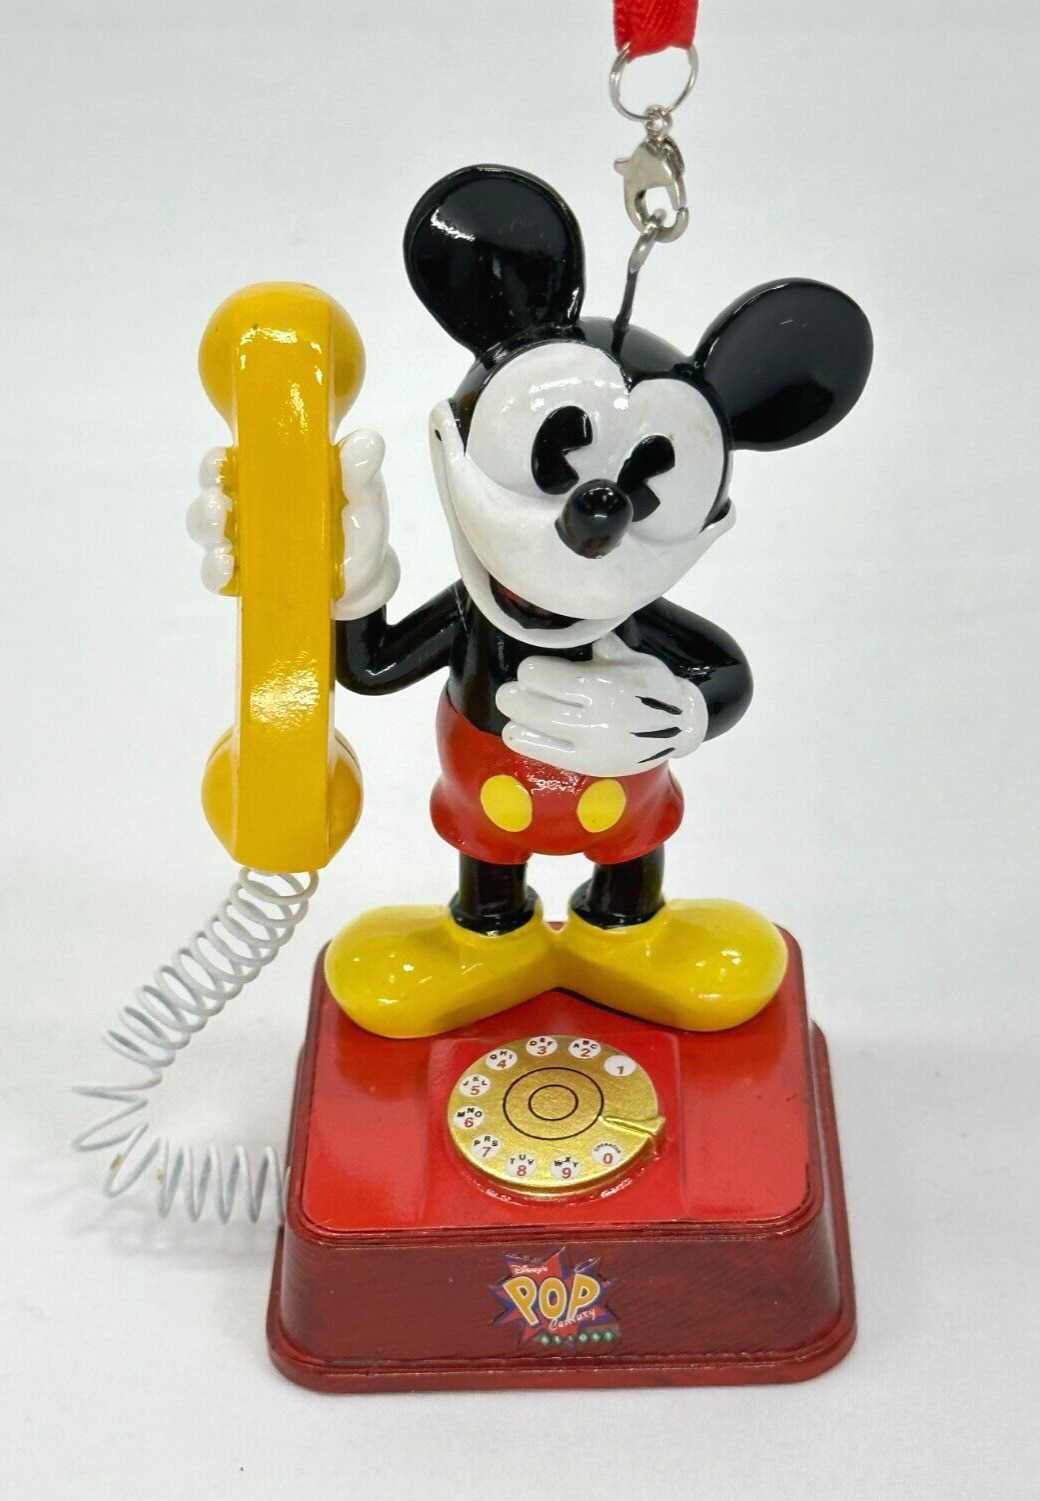 Disney World Pop Century Resort Mickey Mouse Rotary Telephone Ornament